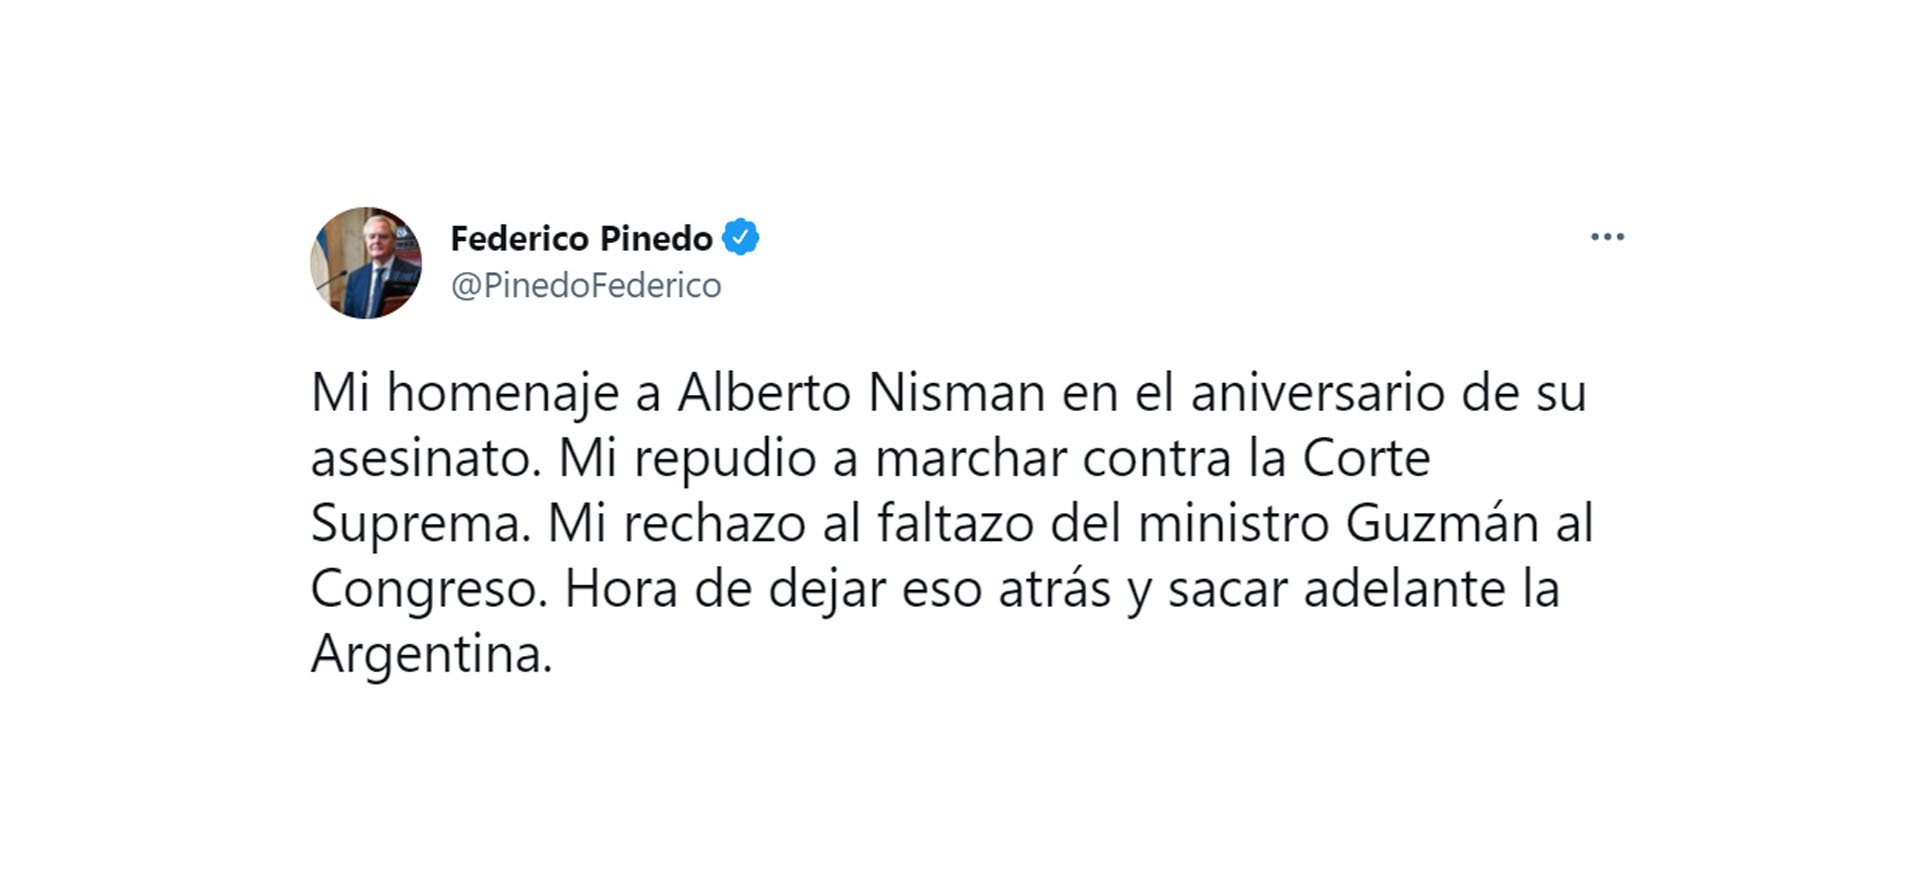 Tuit del ex presidente del Senado, Federico Pinedo